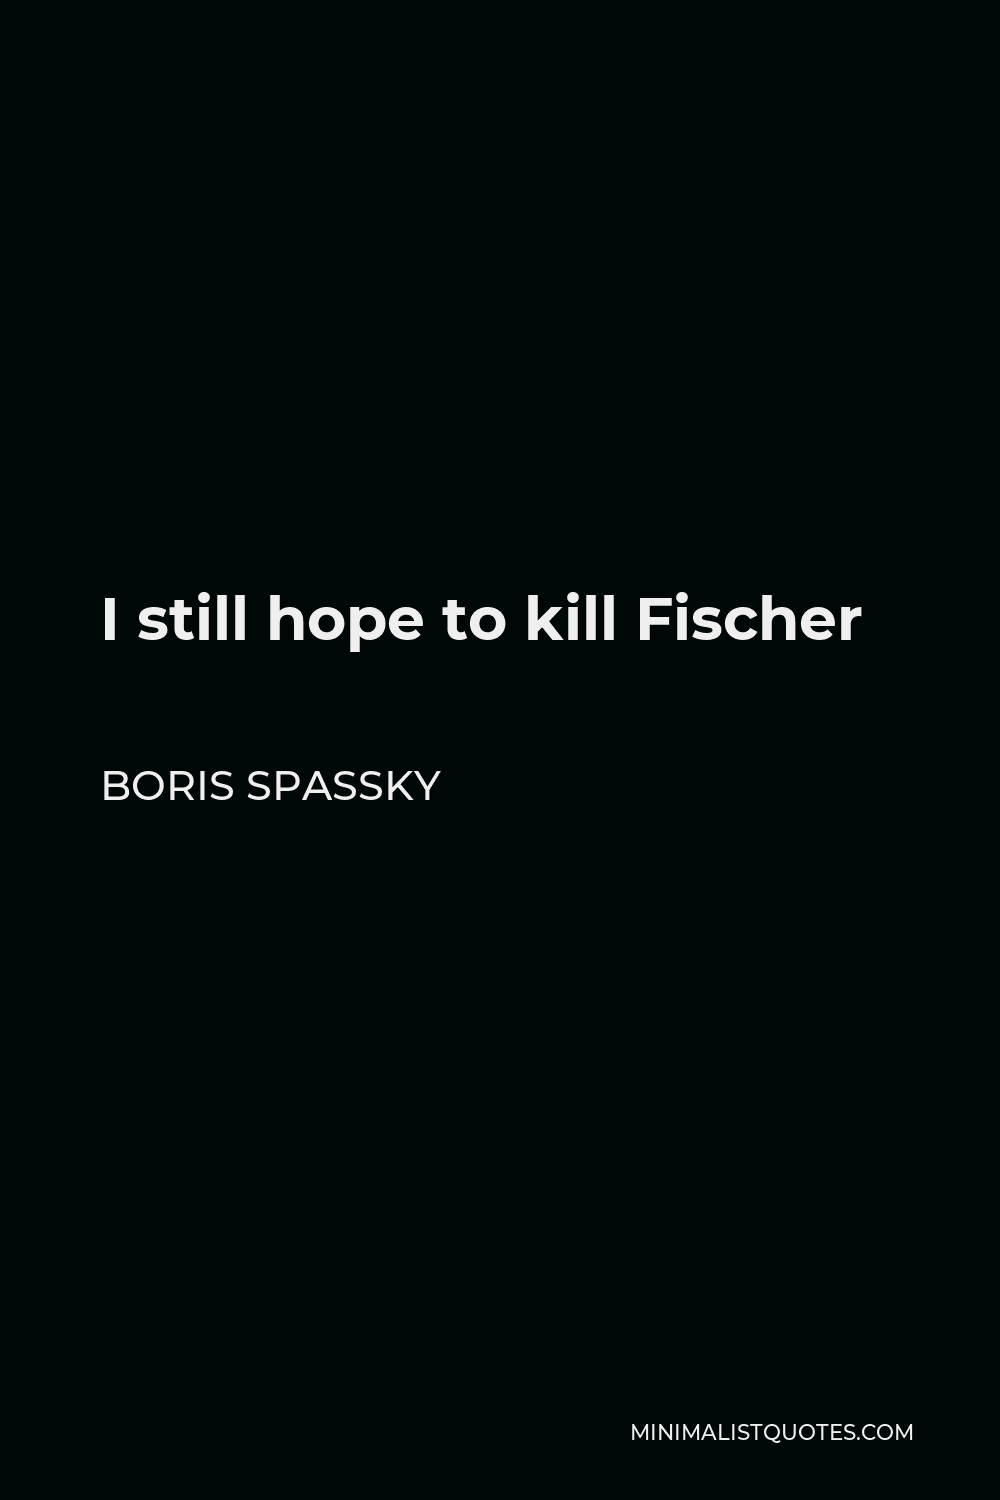 Boris Spassky Quote - I still hope to kill Fischer